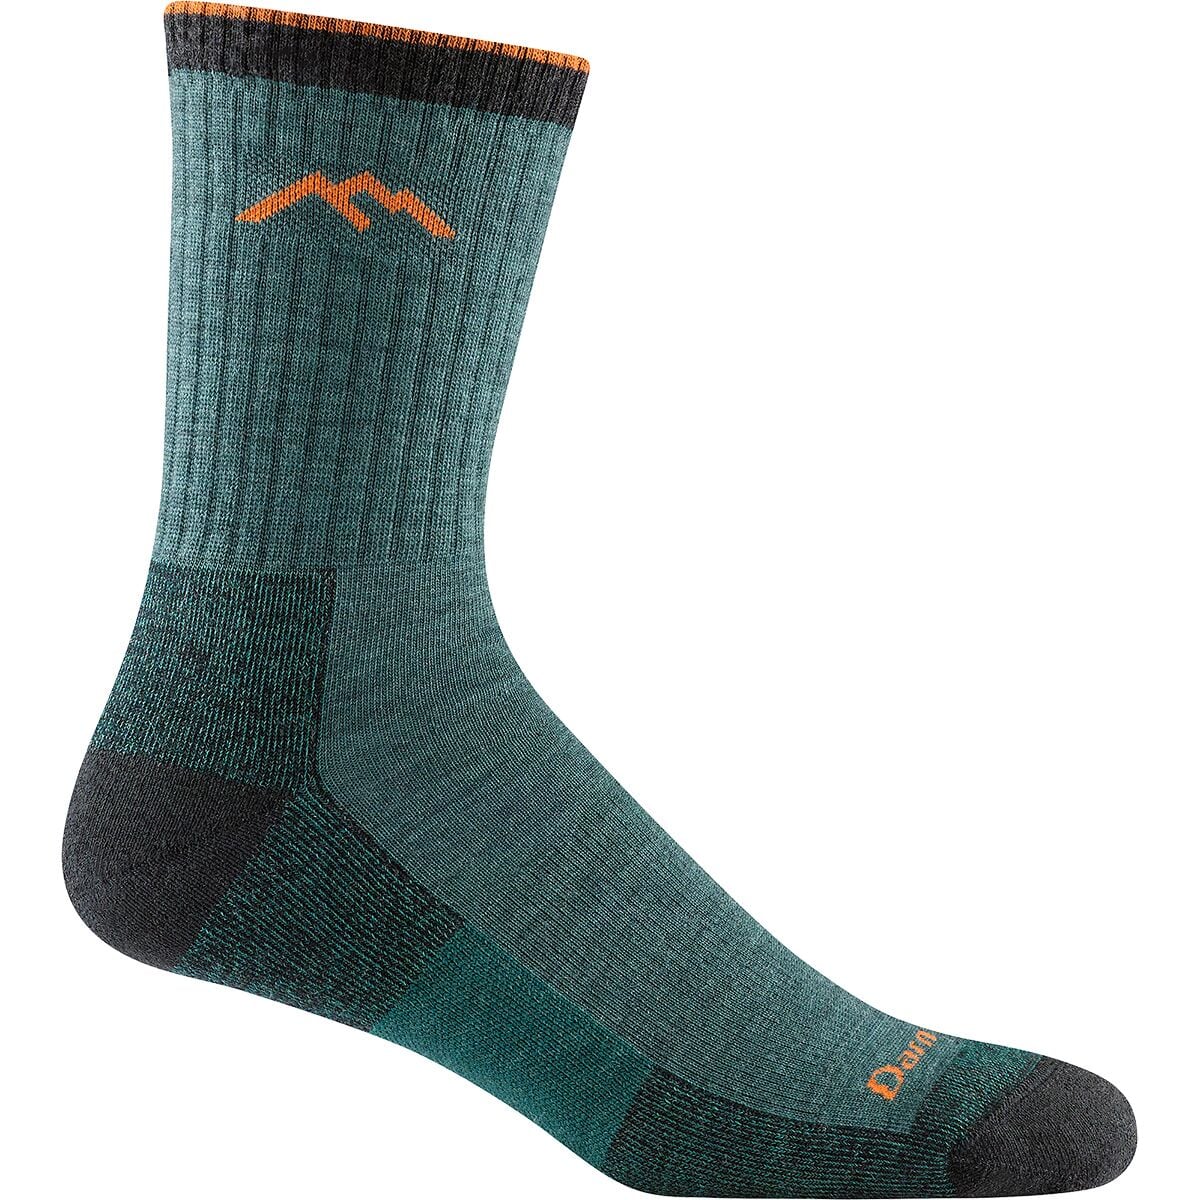 VITSOCKS Men's Merino Wool HIKING Walking Outdoor Socks Warm Cushioned Breathable 